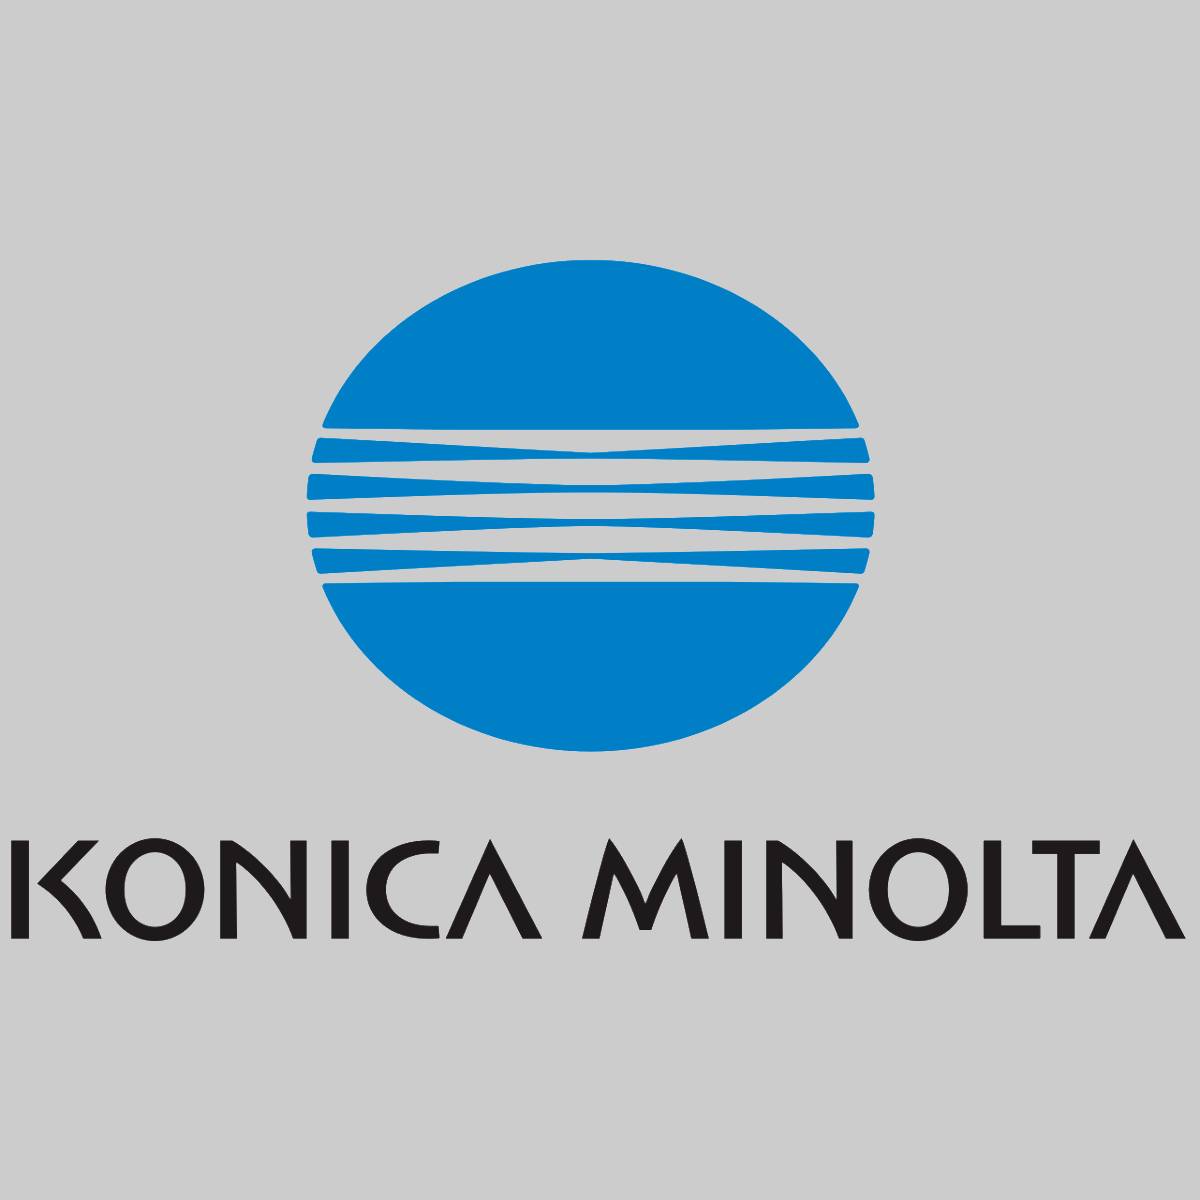 "Original Konica Minolta DV616Y A5E7700 Developer Yellow voor Bizhub Press C1085